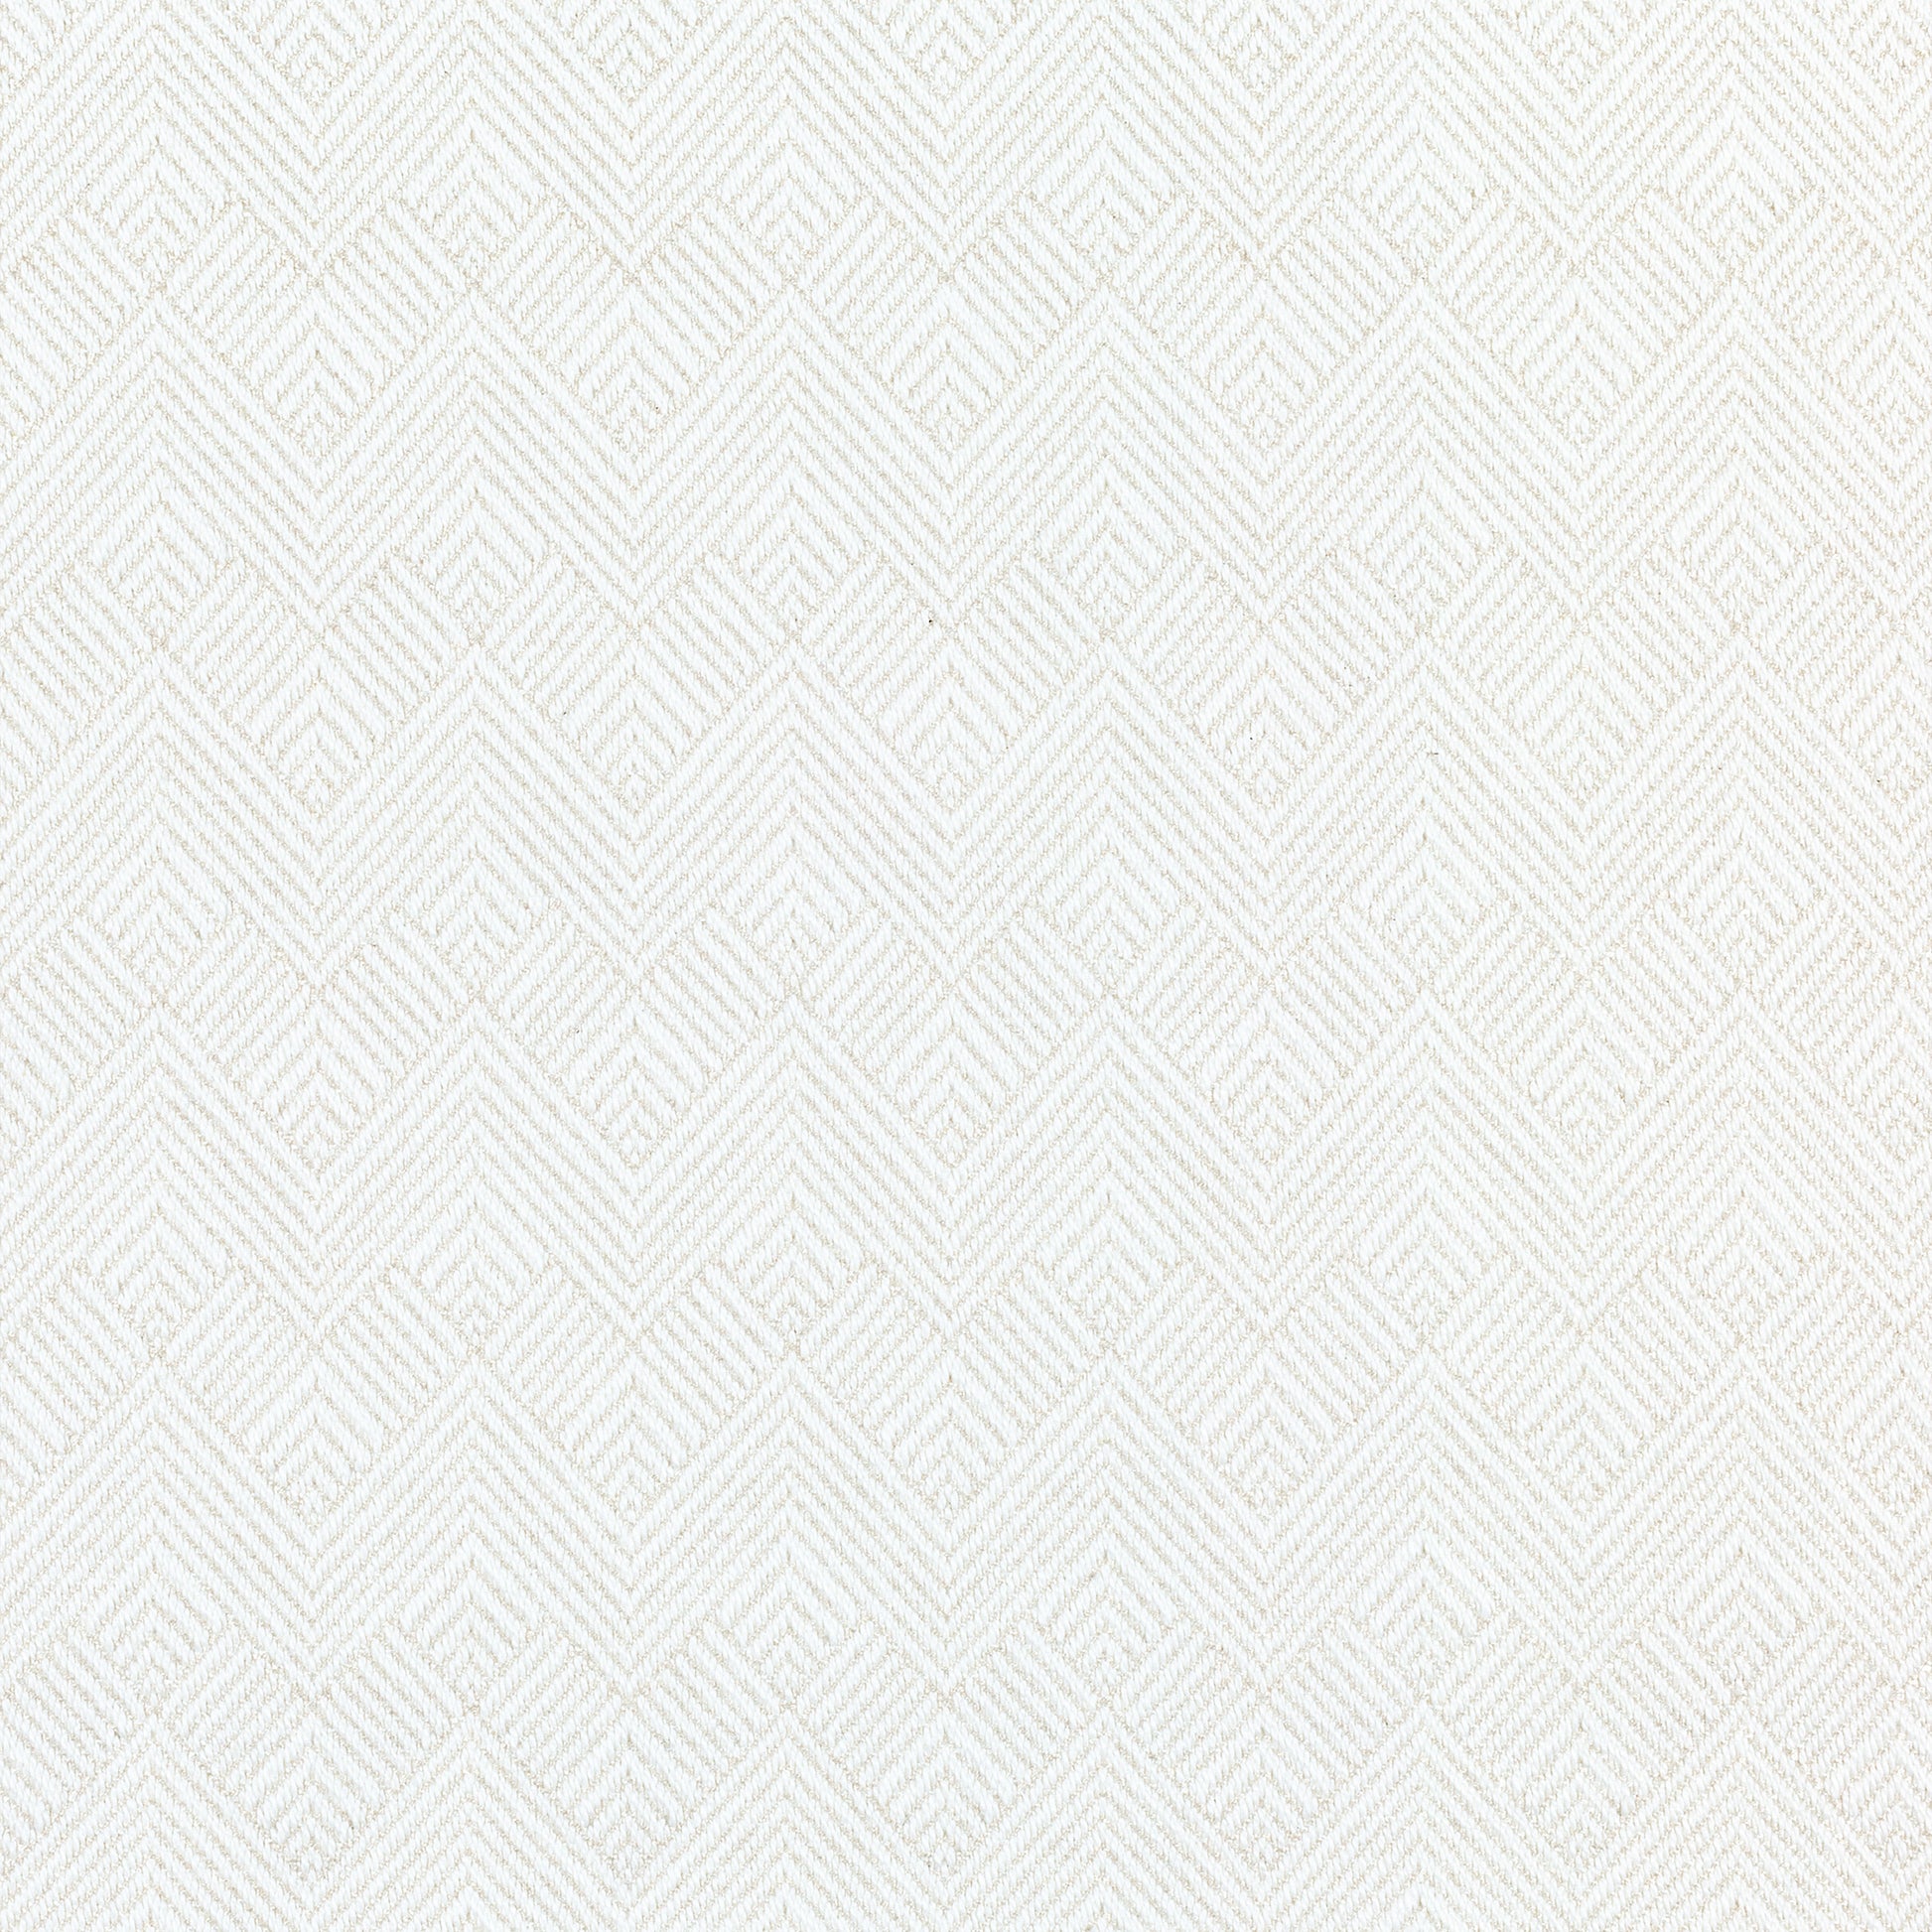 Purchase Thibaut Fabric Item# W73332 pattern name Maddox color Vanilla